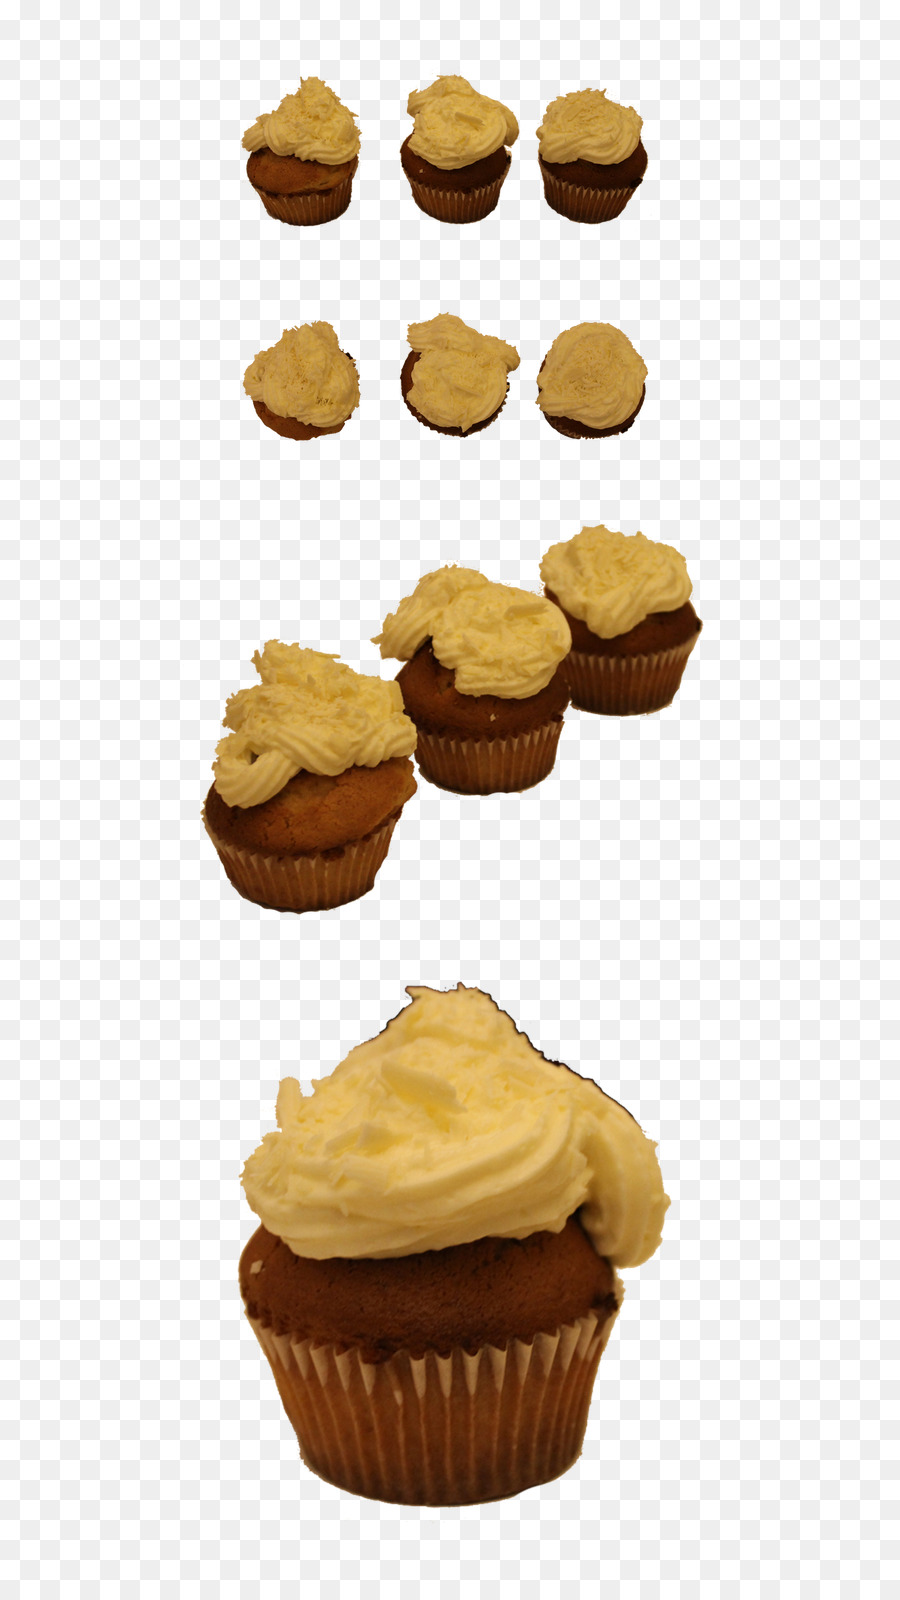 Cupcake Peanut butter cup Muffin mit Buttercreme-Geschmack - Vanille Cupcake